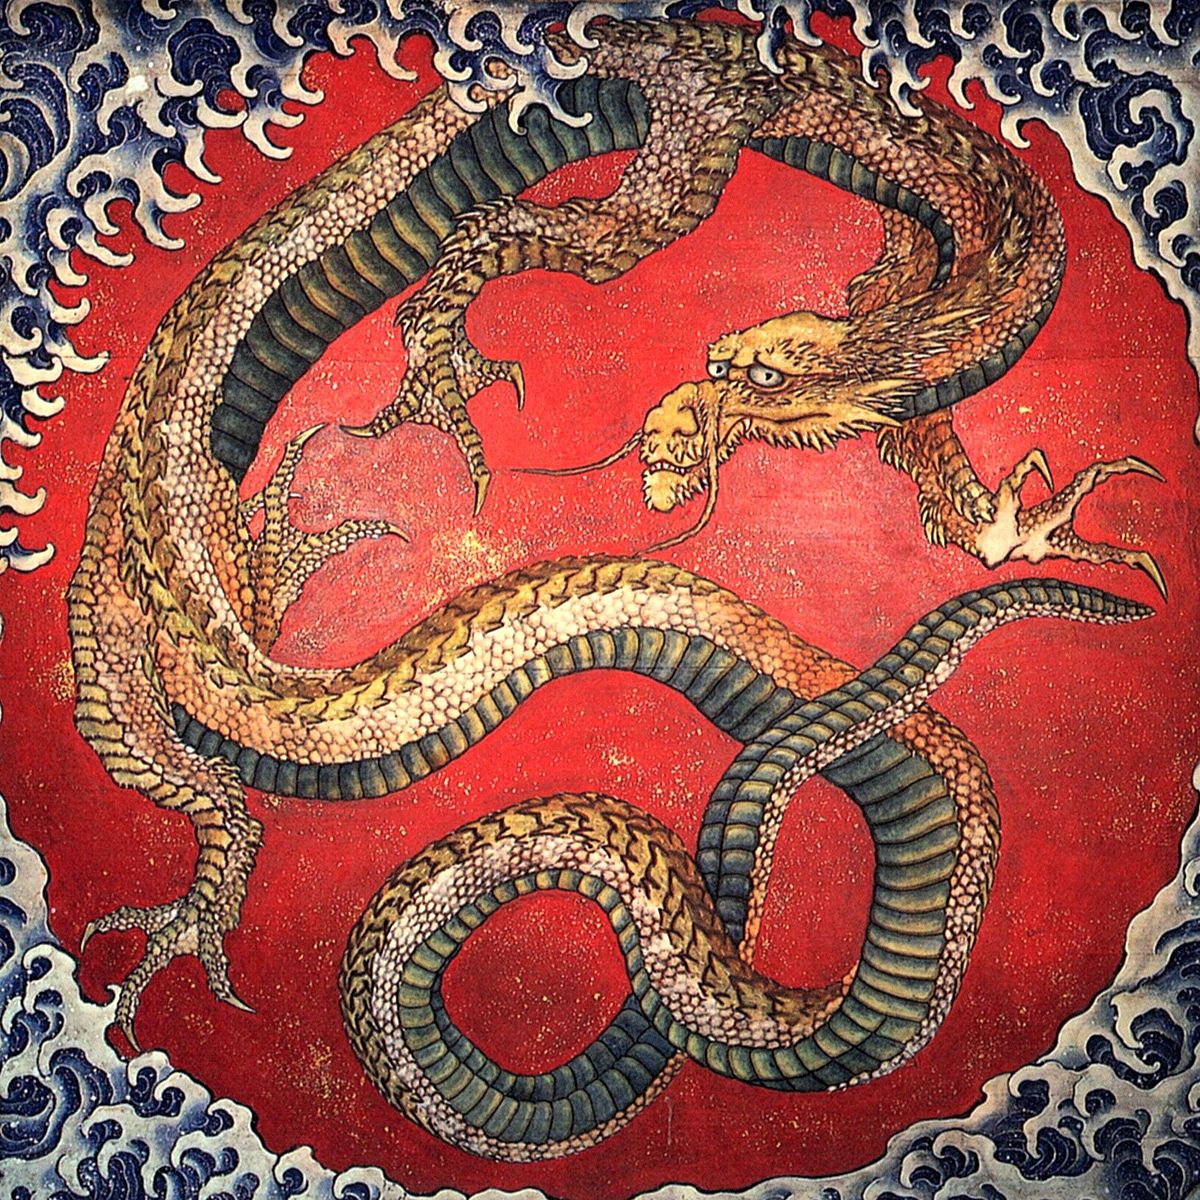 Sirrush Dragon, Ishtar Gate, Babylon